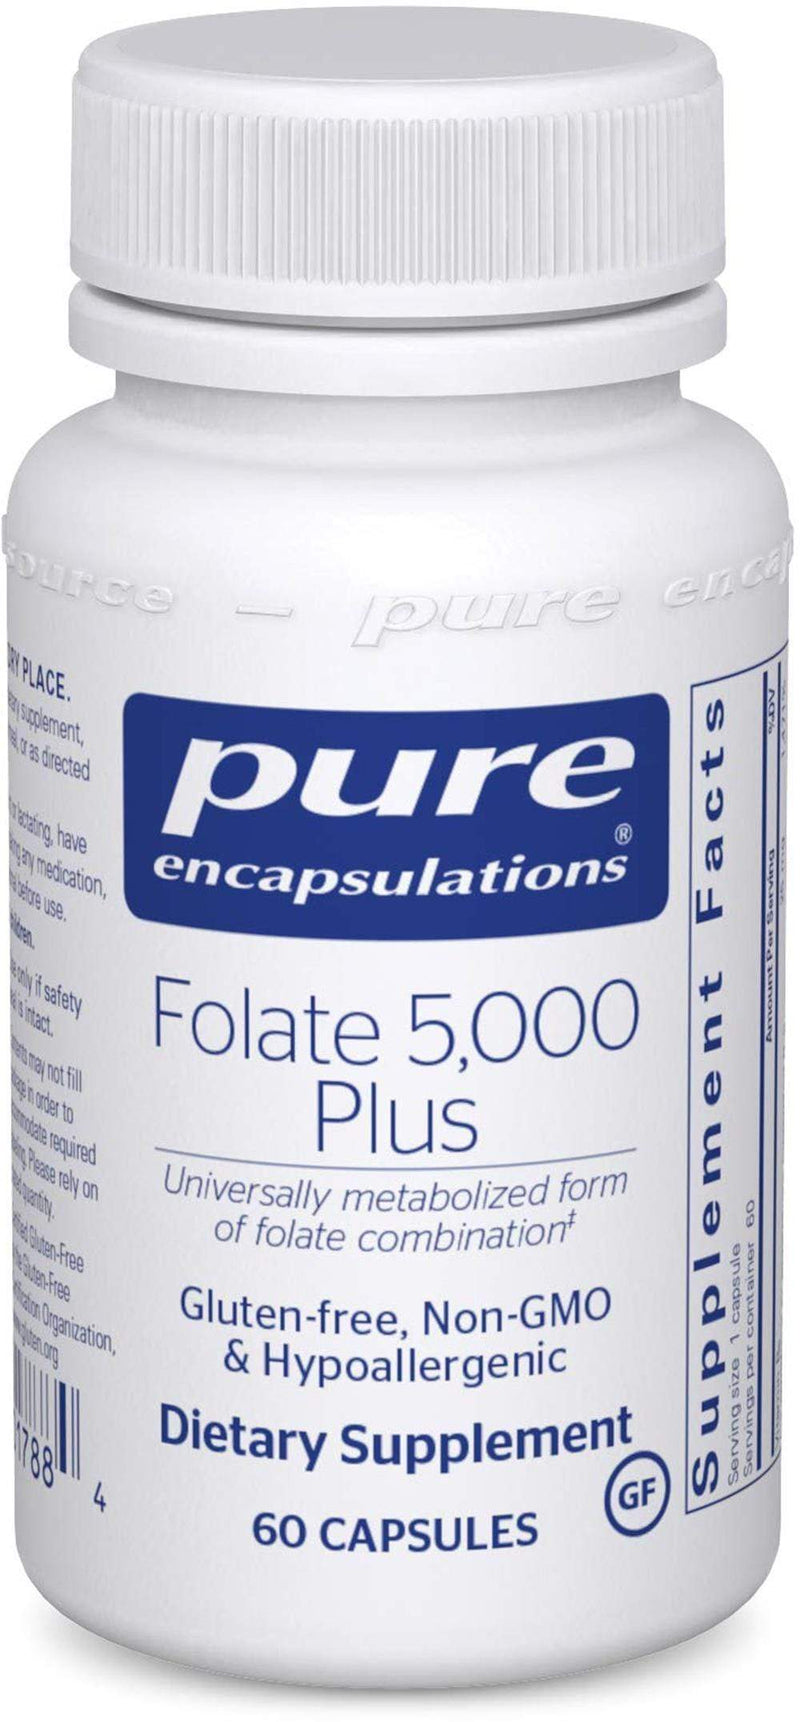 Pure Encapsulations Folate 5,000 Plus -- 60 Capsules